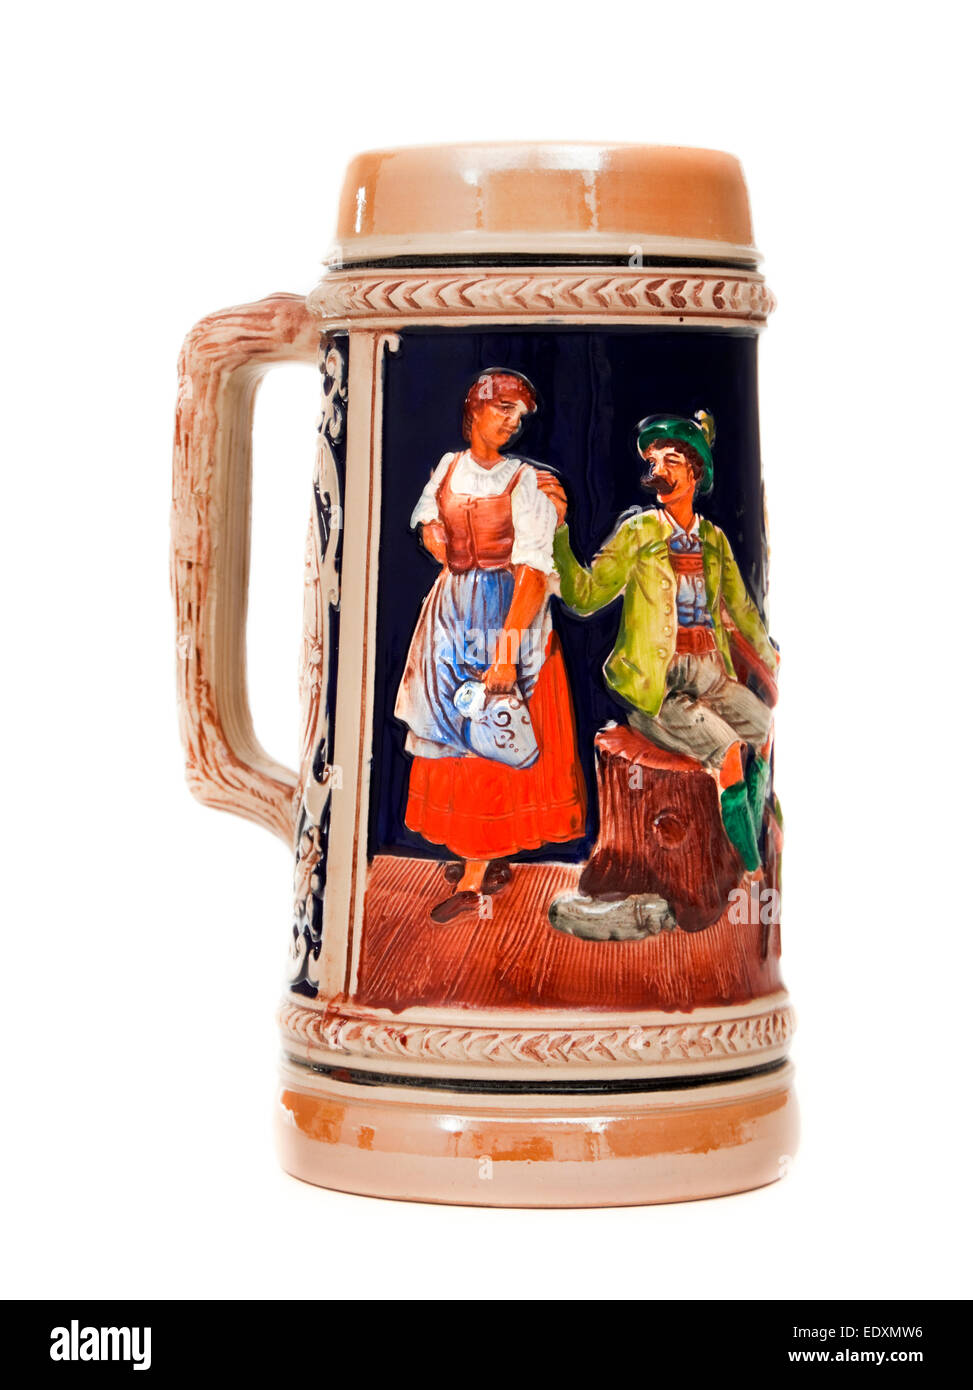 Vintage German ceramic Stein / tankard Stock Photo